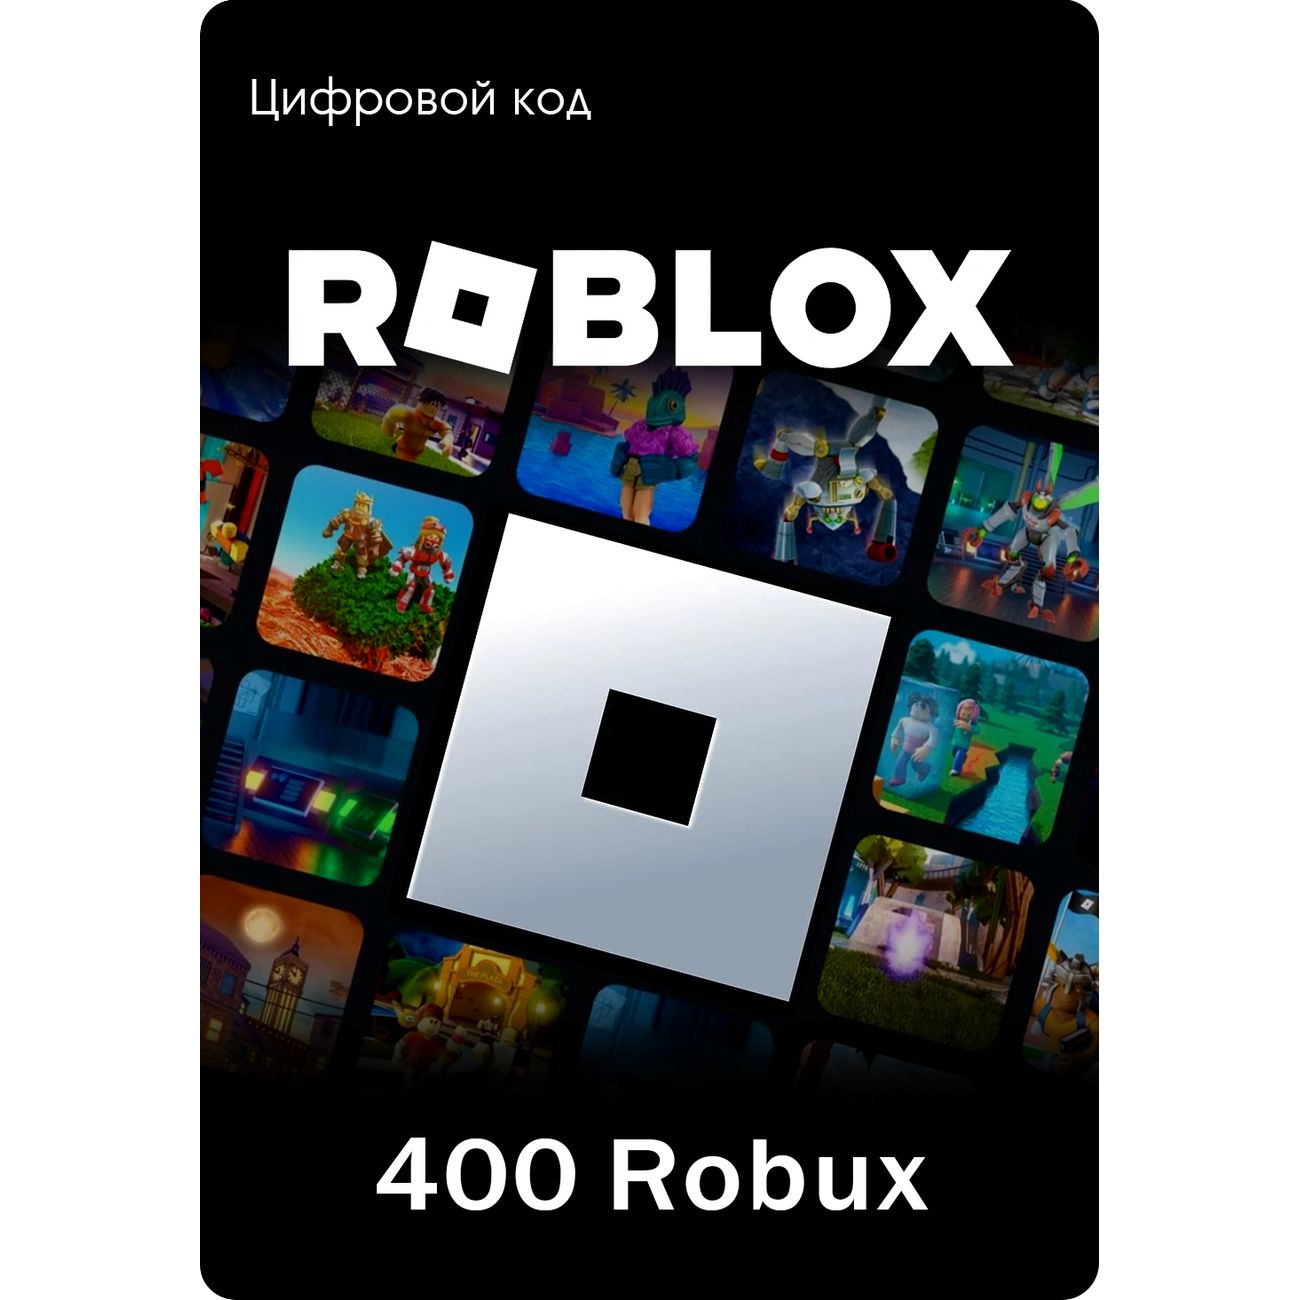 Код 1000 роблокс. Карта РОБЛОКС. Коды на робуксы карточки. Roblox валюта. Карта на робуксы фото.